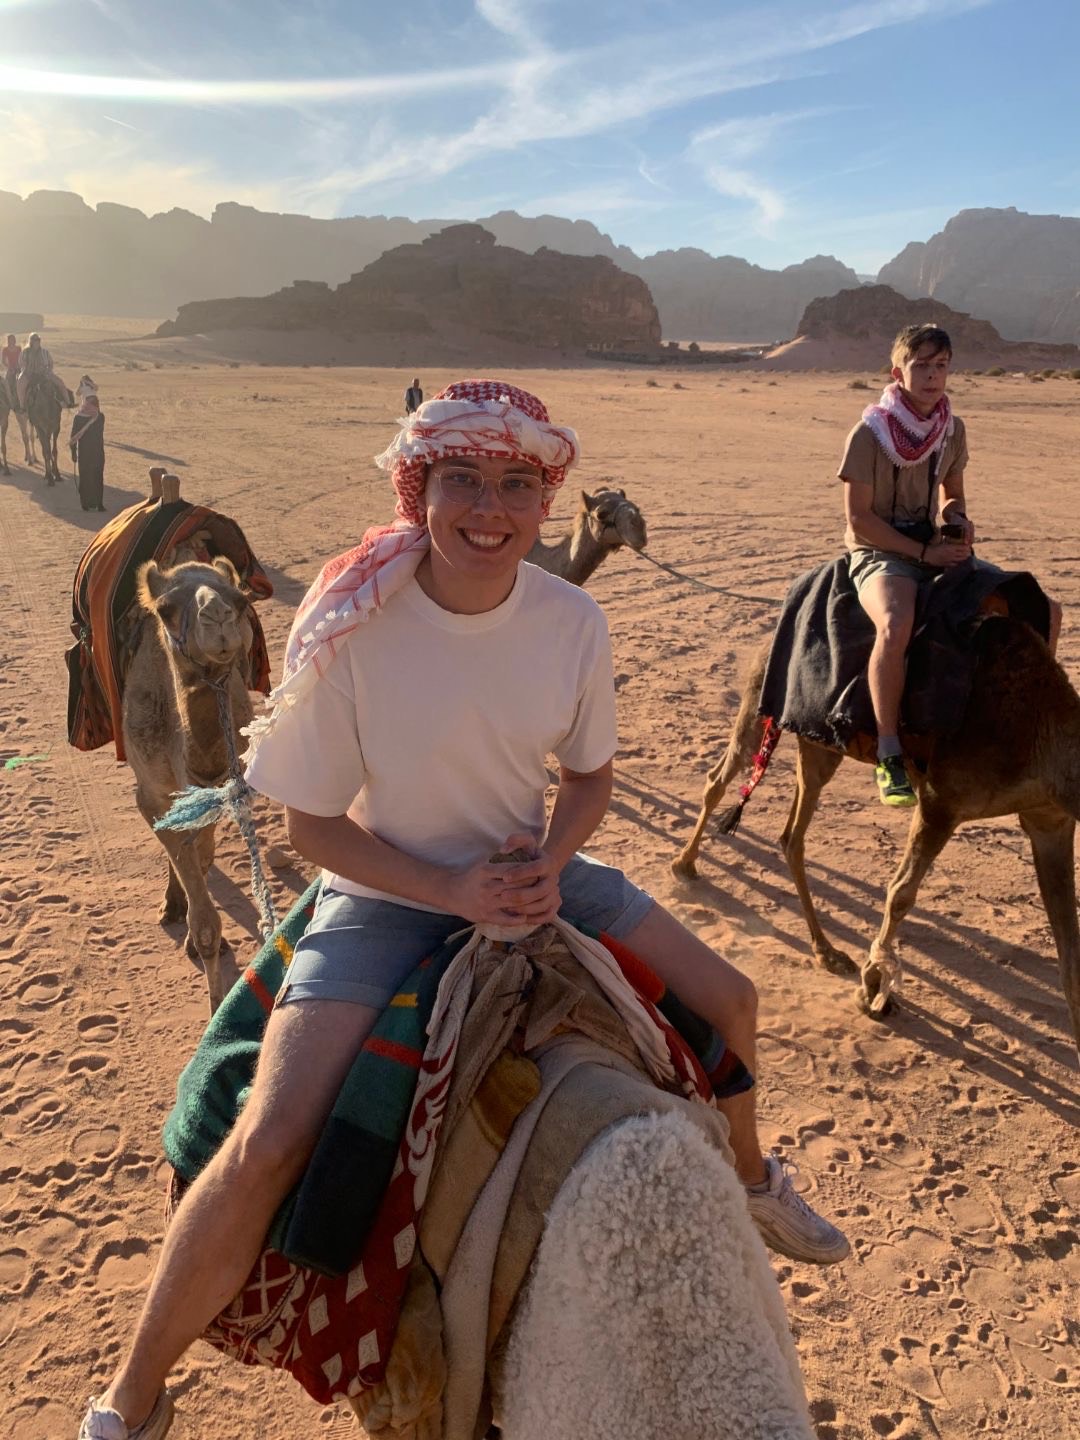 Alexander rir på en kamel, smiler. Flere elever på kameler i bakgrunnen.